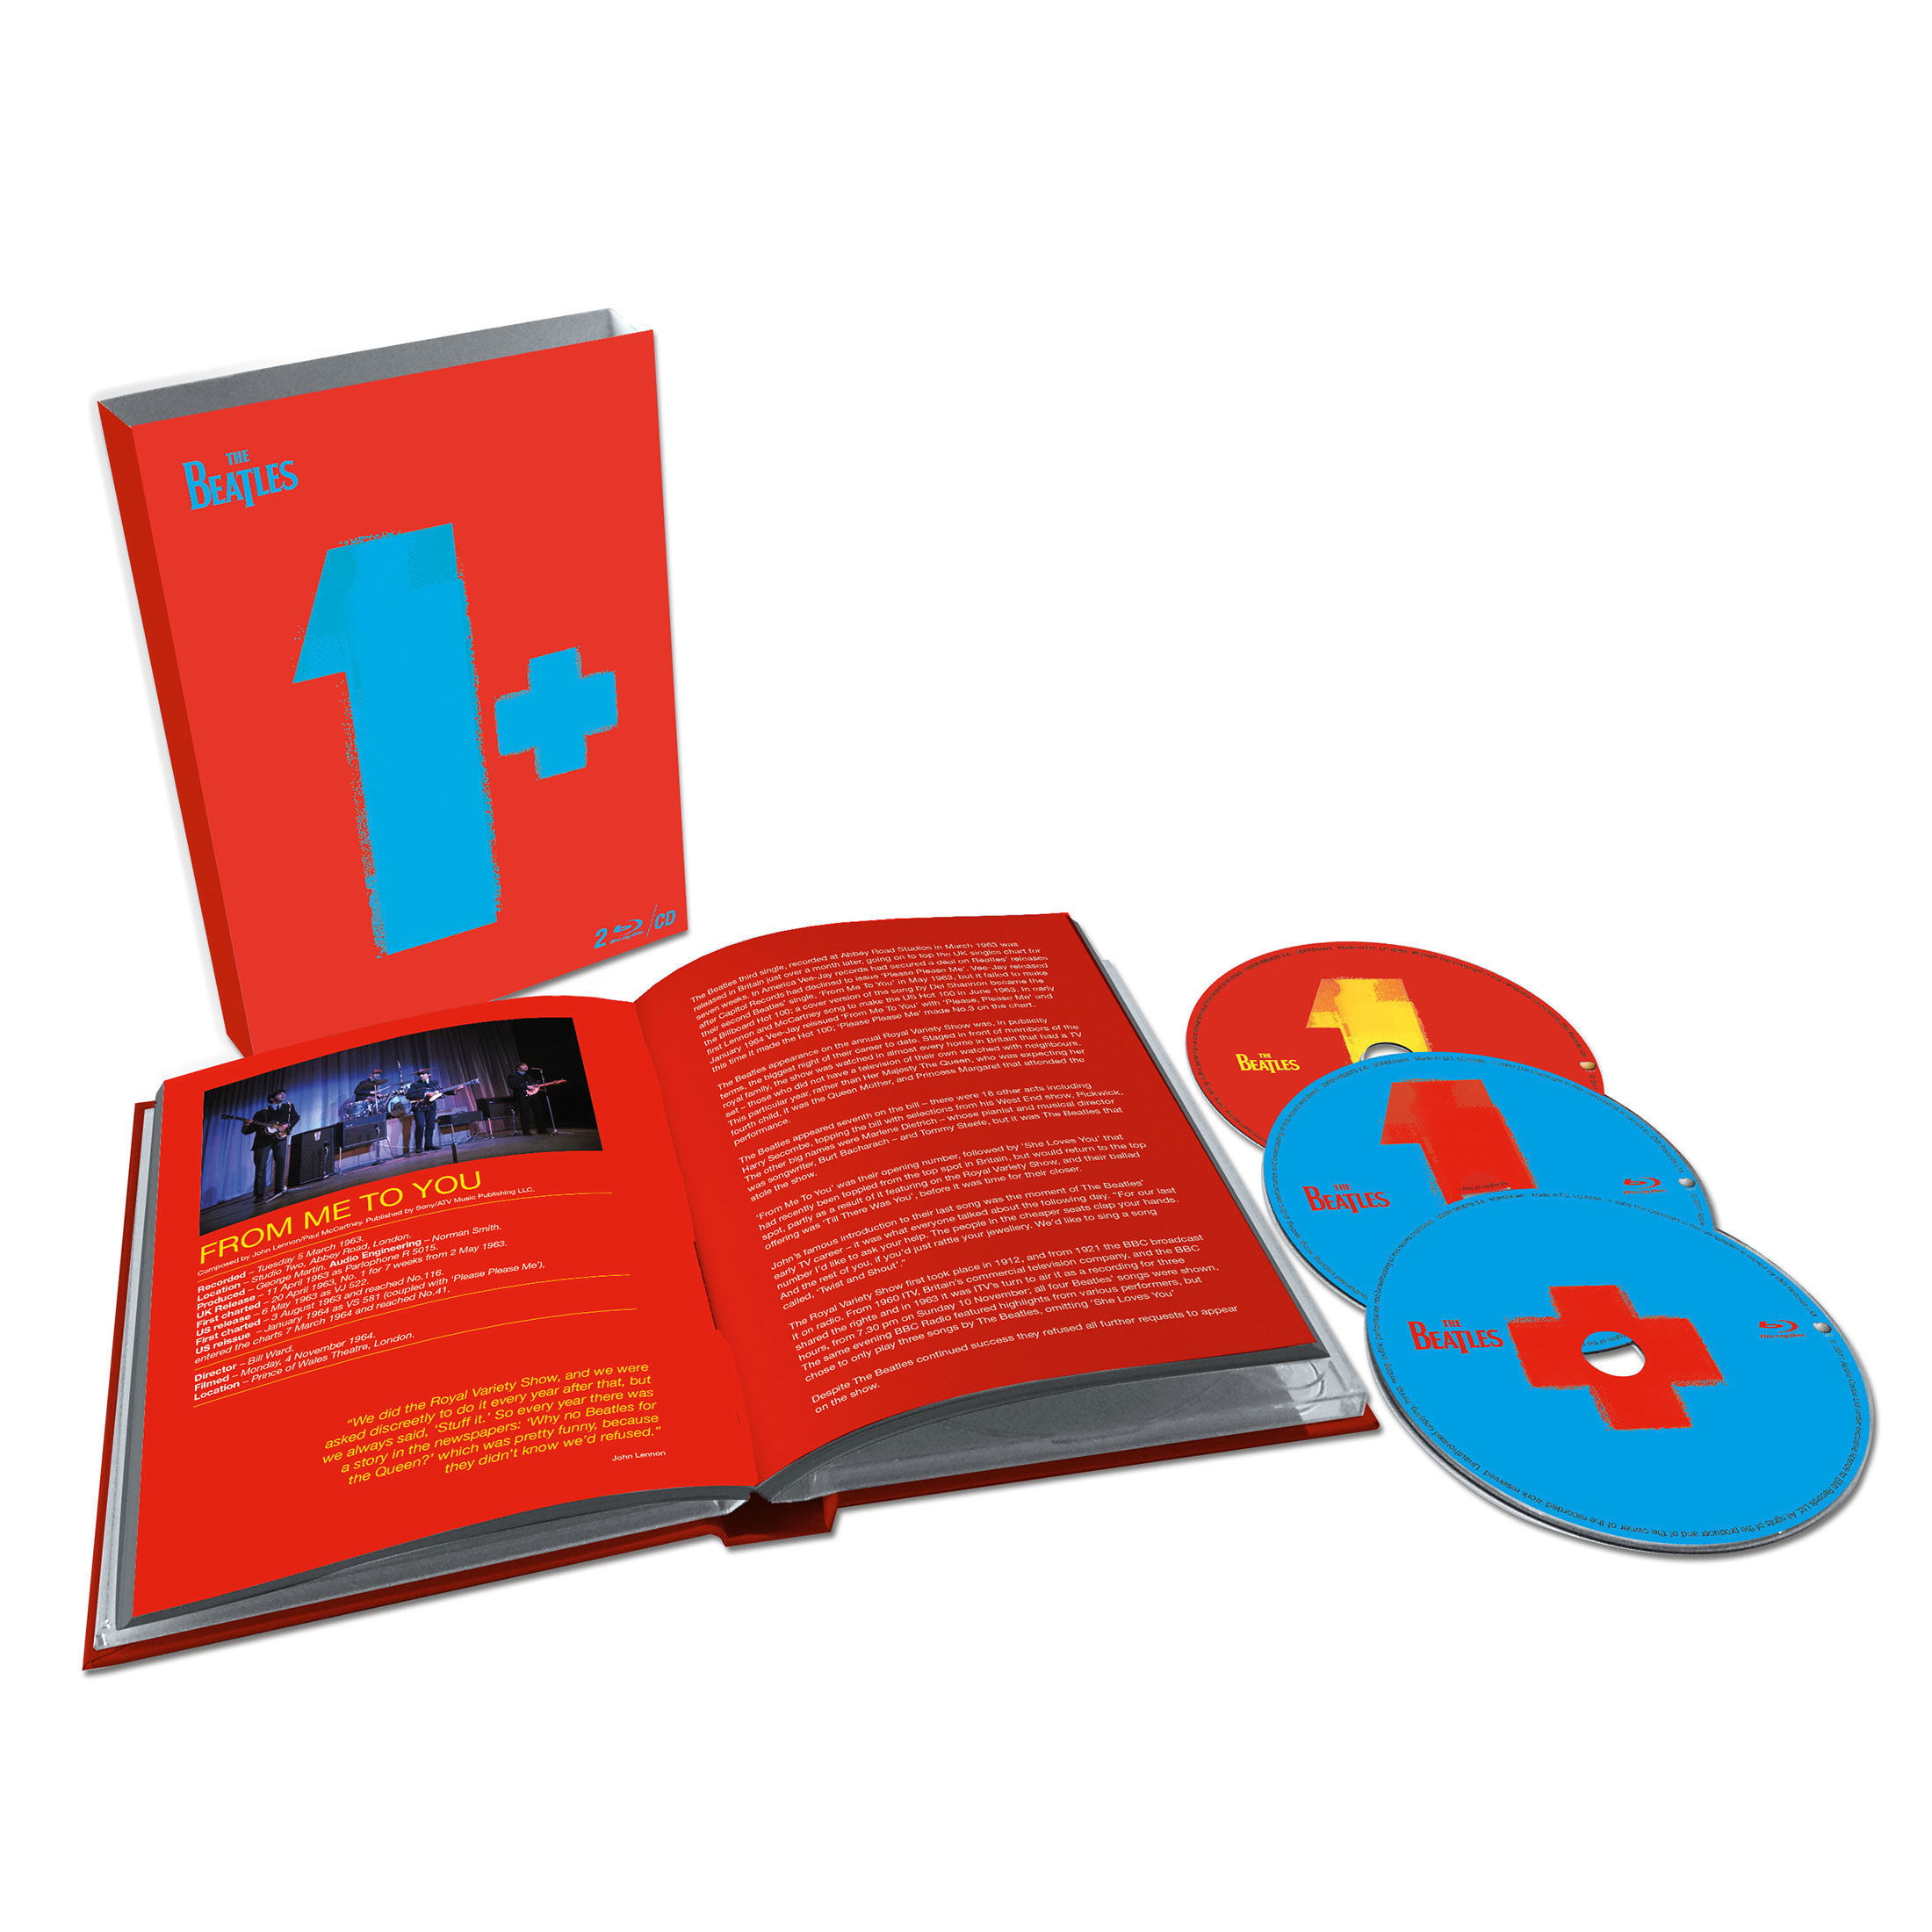 The Beatles - 1+ (CD+2 DVD)